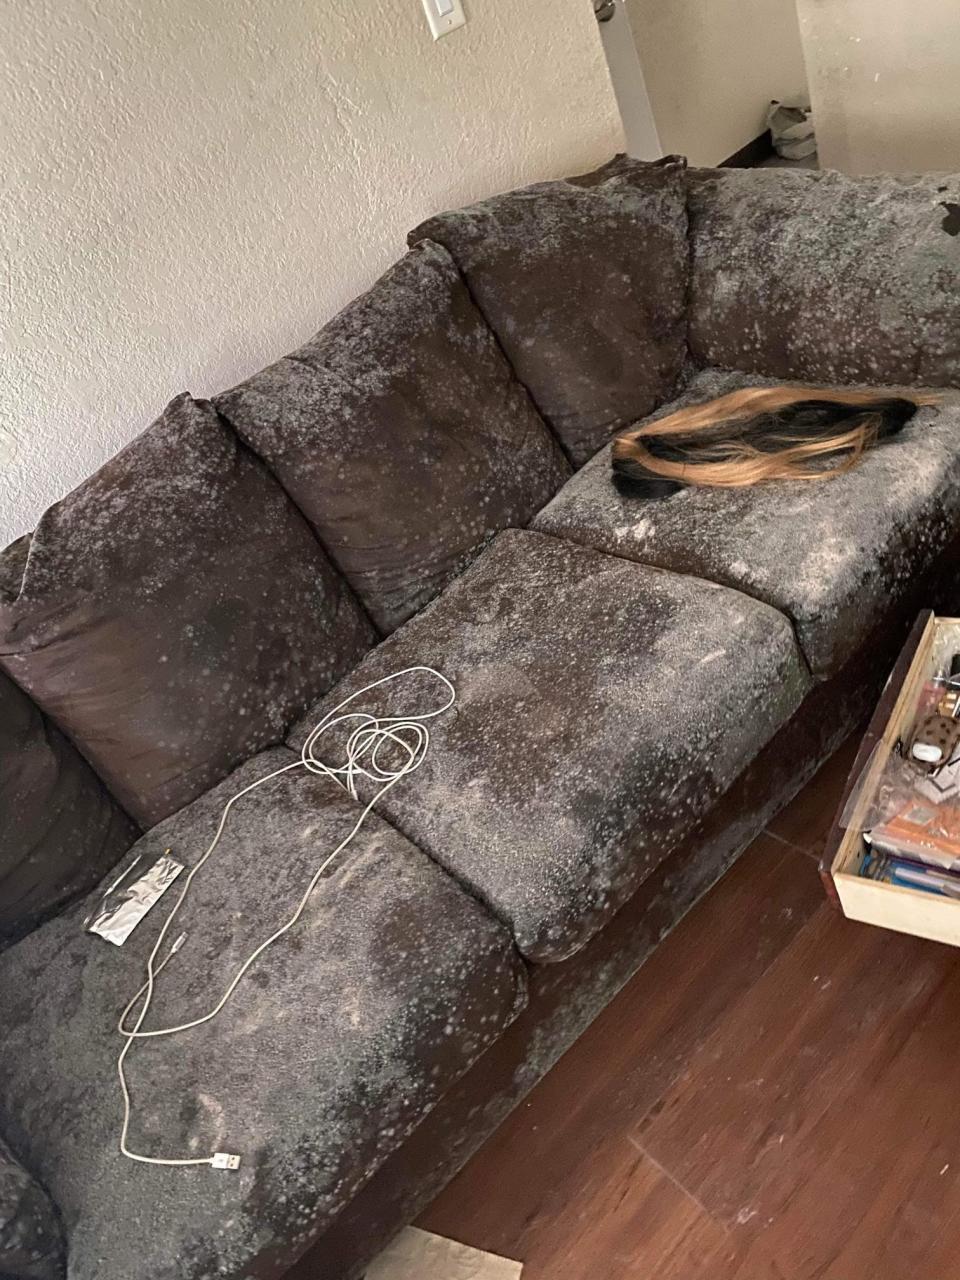 Alicia Harris said mold has taken over her furniture